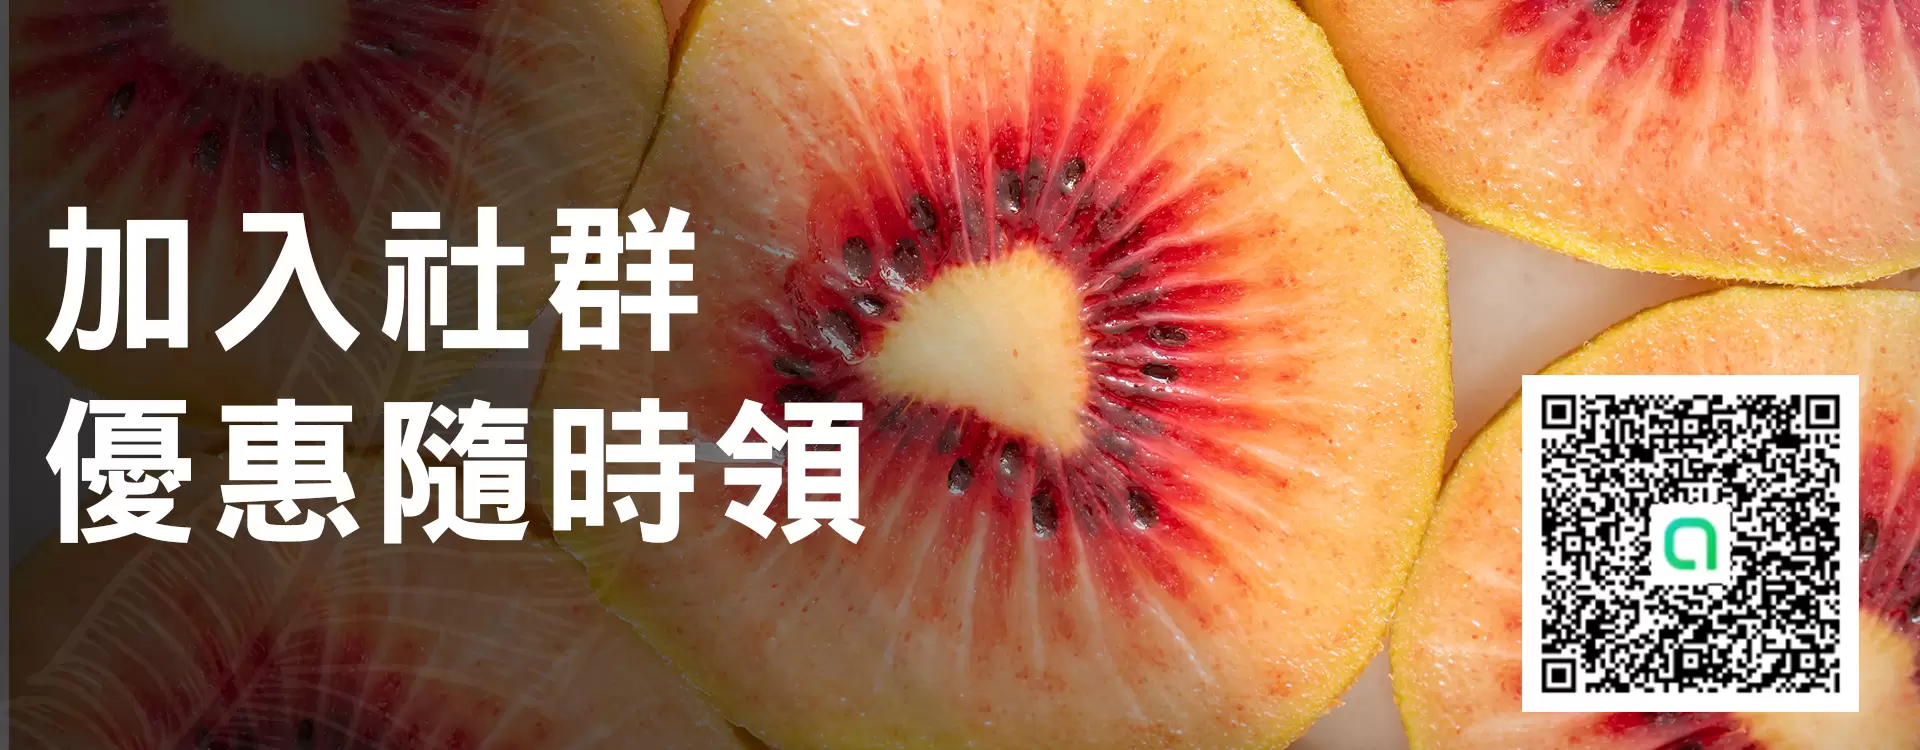 lINE社群-臺灣50年水果蔬果專家 | 優質蔬果、水果禮盒、當季水果推薦